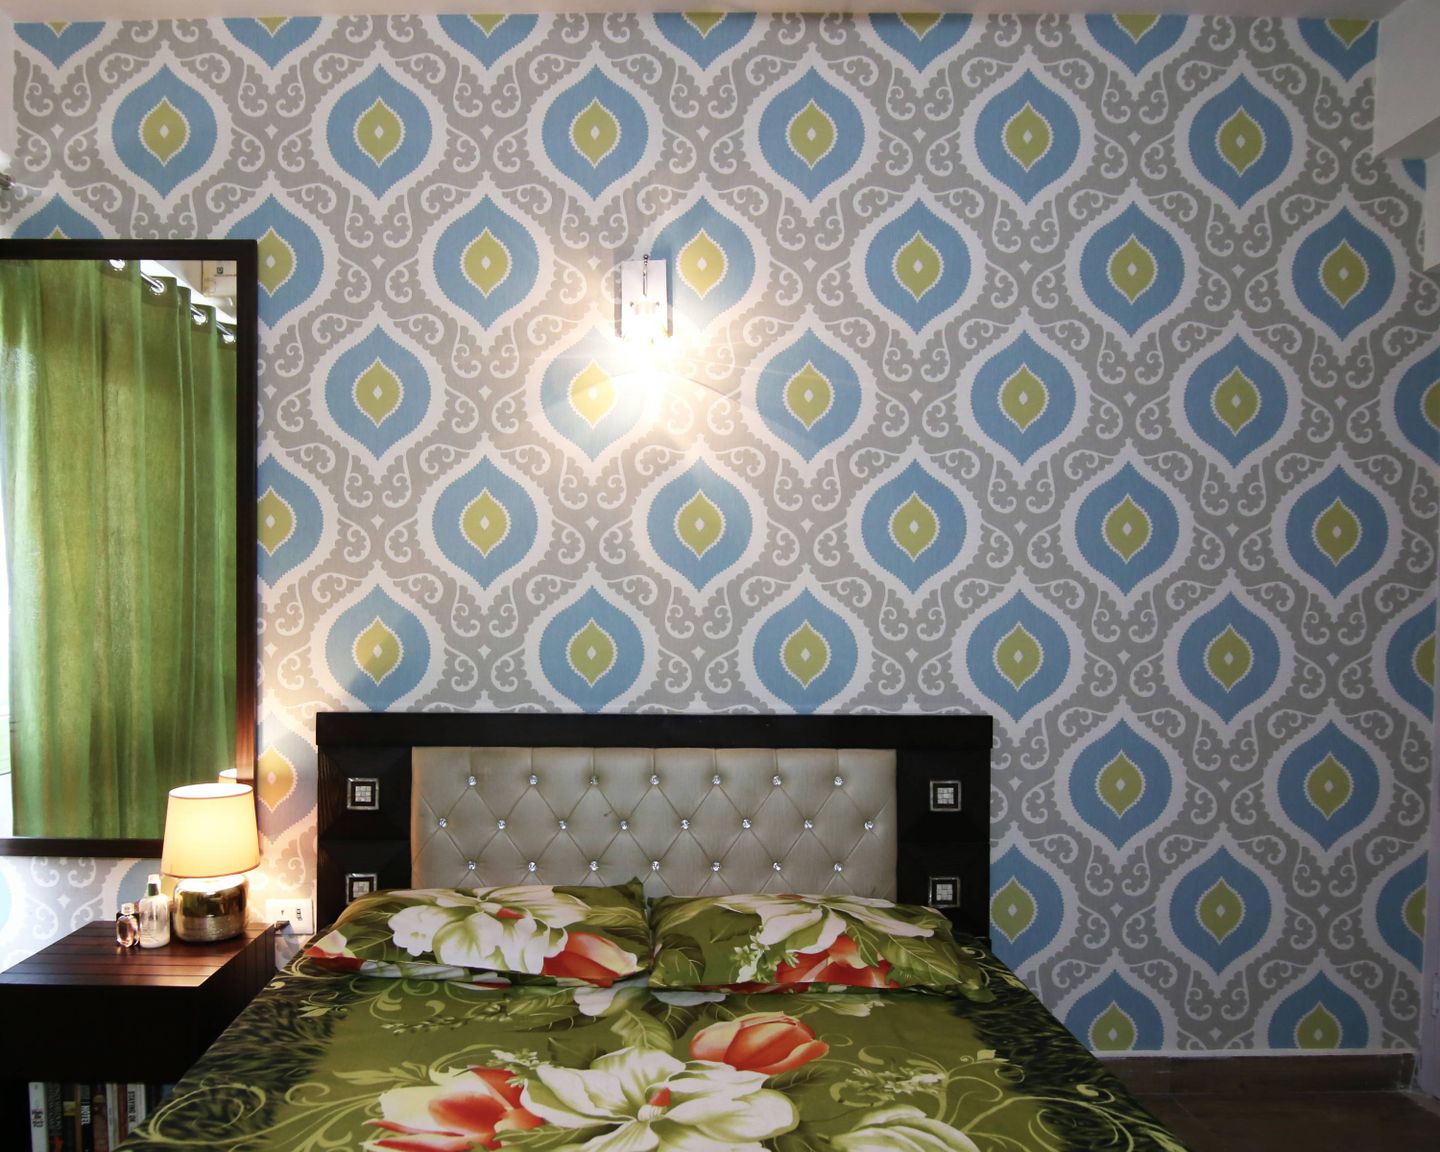 Tricolour Motif Wallpaper Design For Bedrooms - Livspace